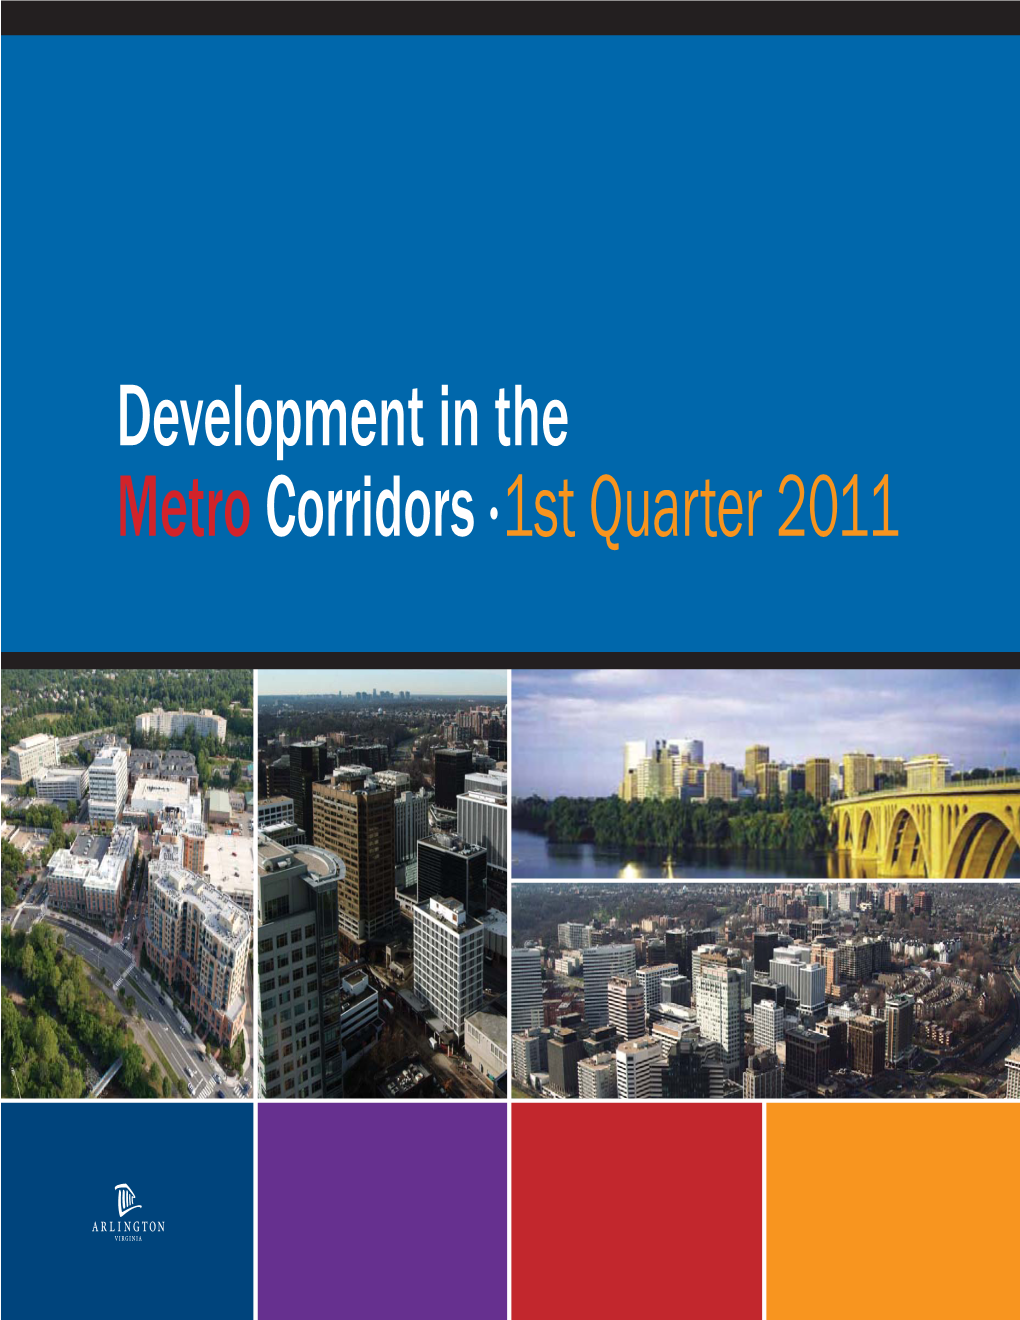 Development in Metro Corridors 2011